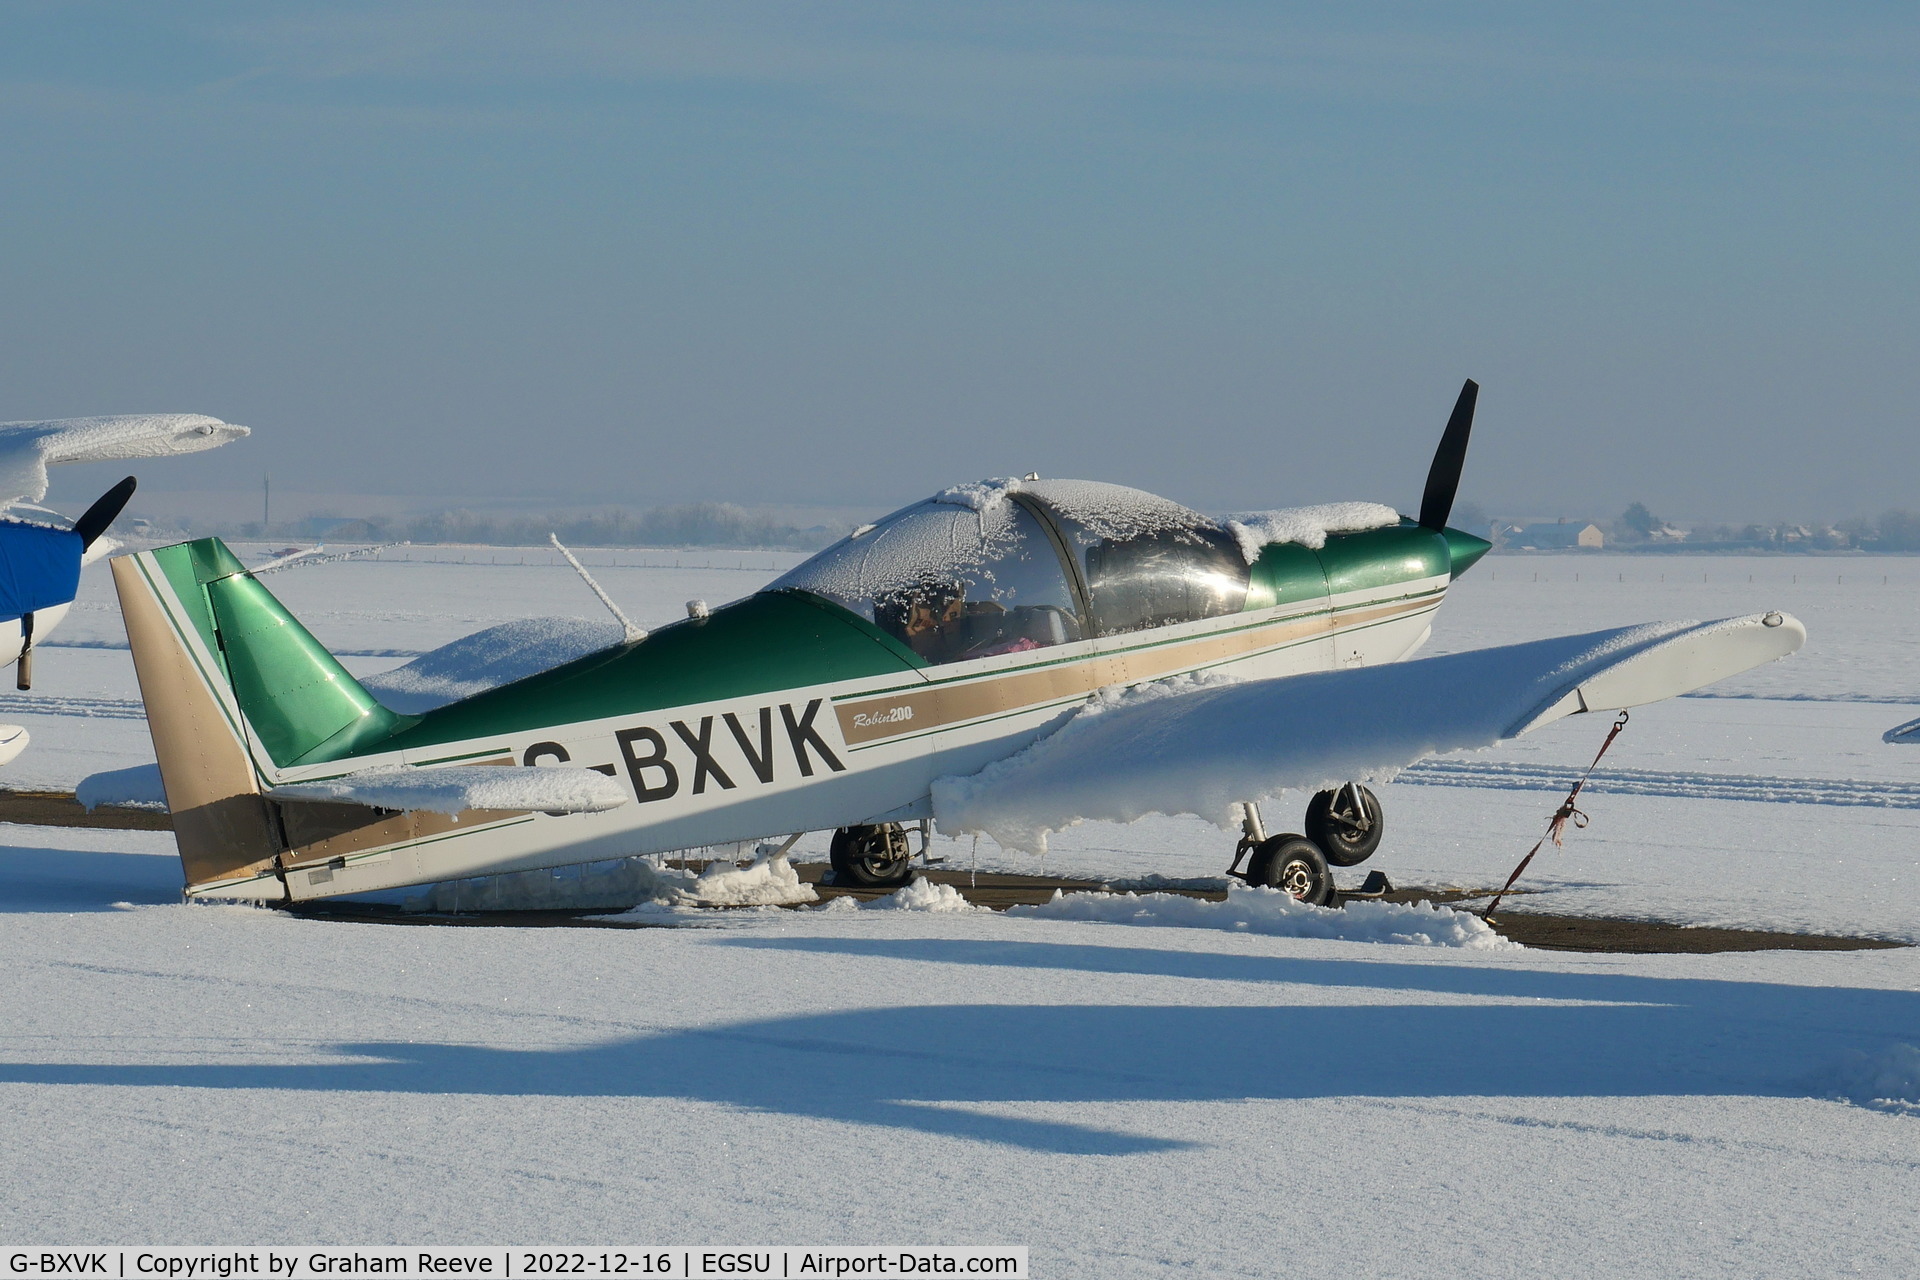 G-BXVK, 1998 Robin HR-200-120B C/N 326, Parked at Duxford in the snow.